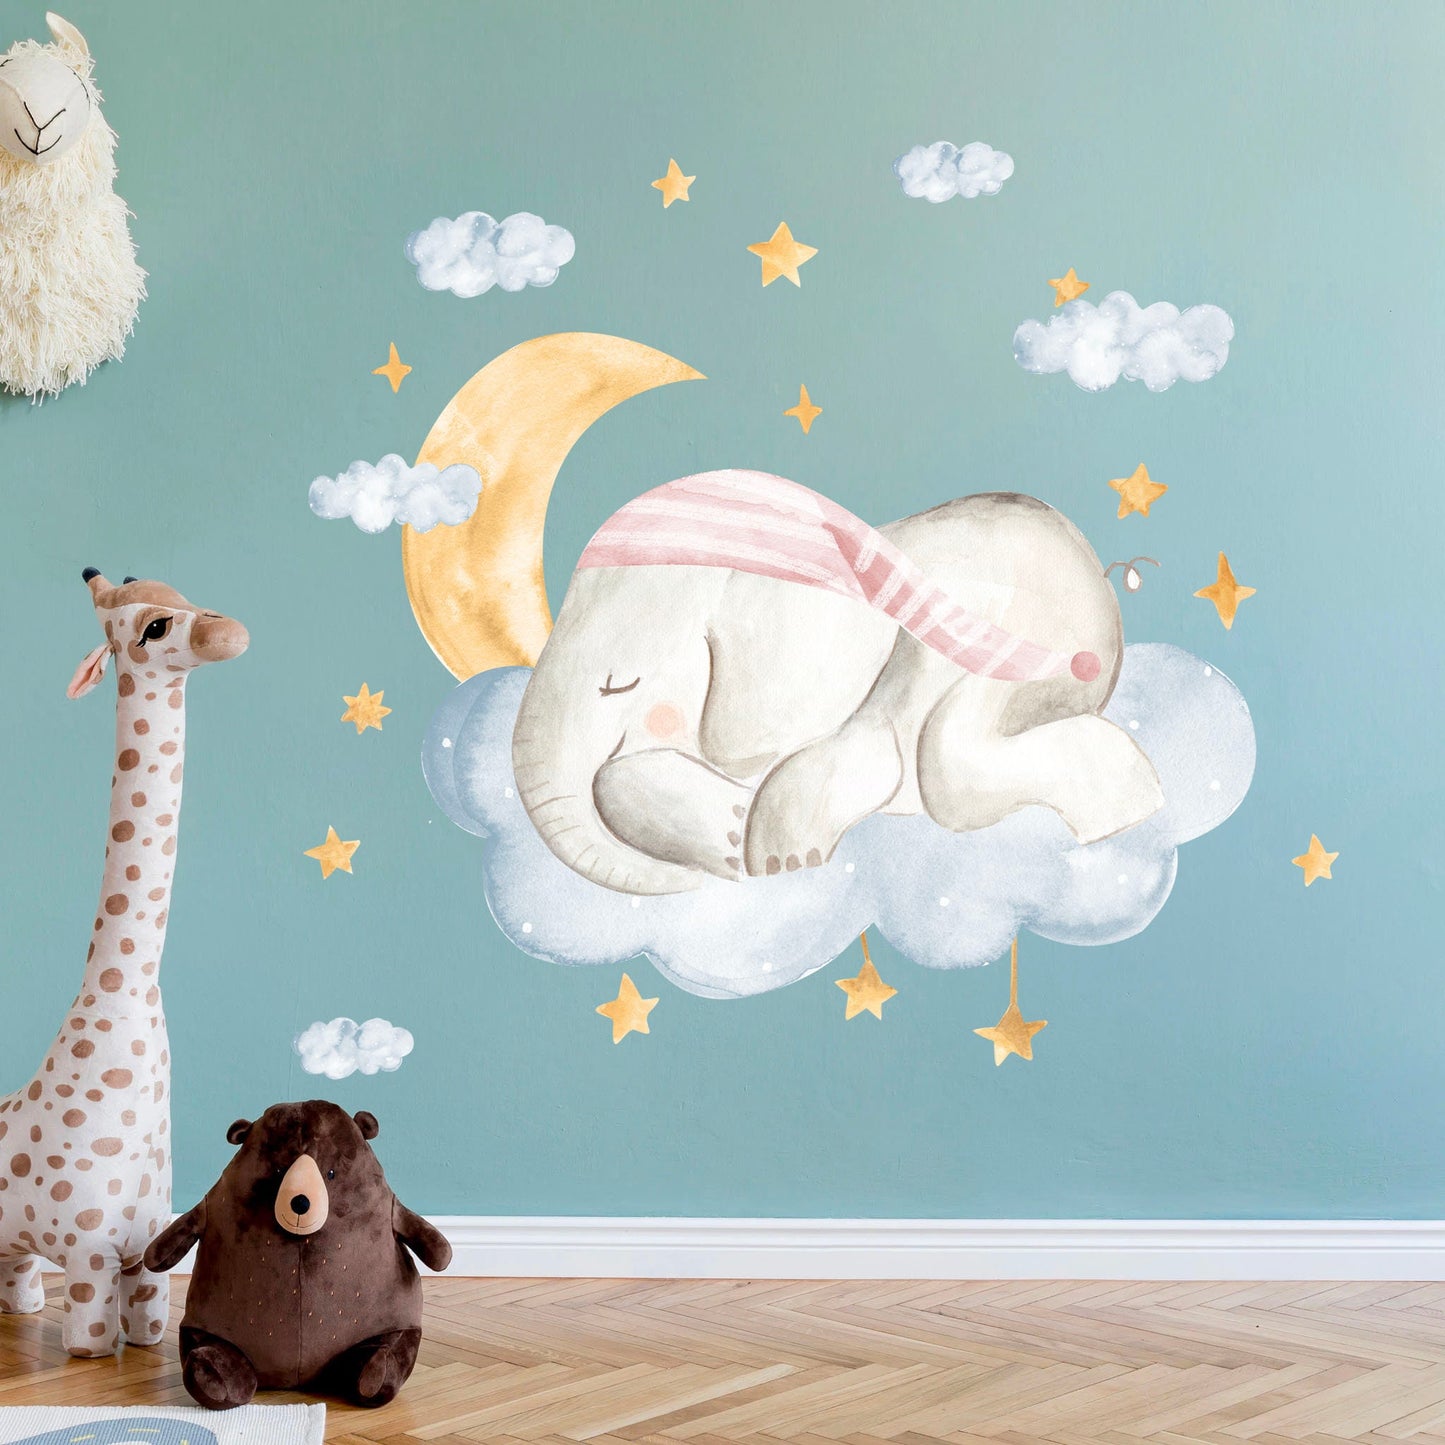 Sleeping Elephant Dreamland: Cartoon Wall Decal for Girls' Room - BR063